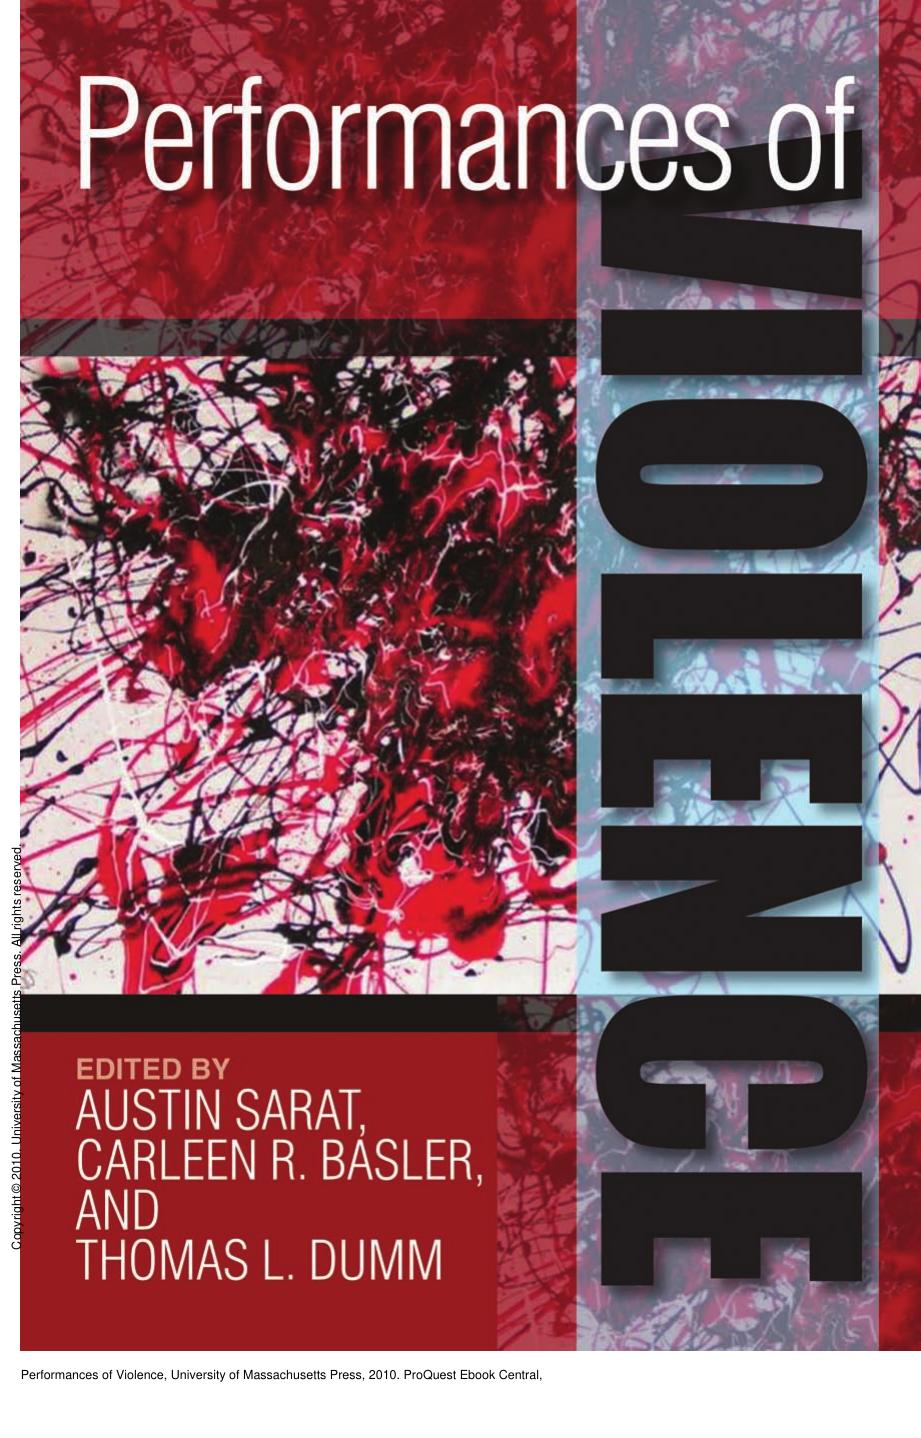 Performances of Violence by Austin Sarat; Carleen R. Basler; Thomas L. Dumm